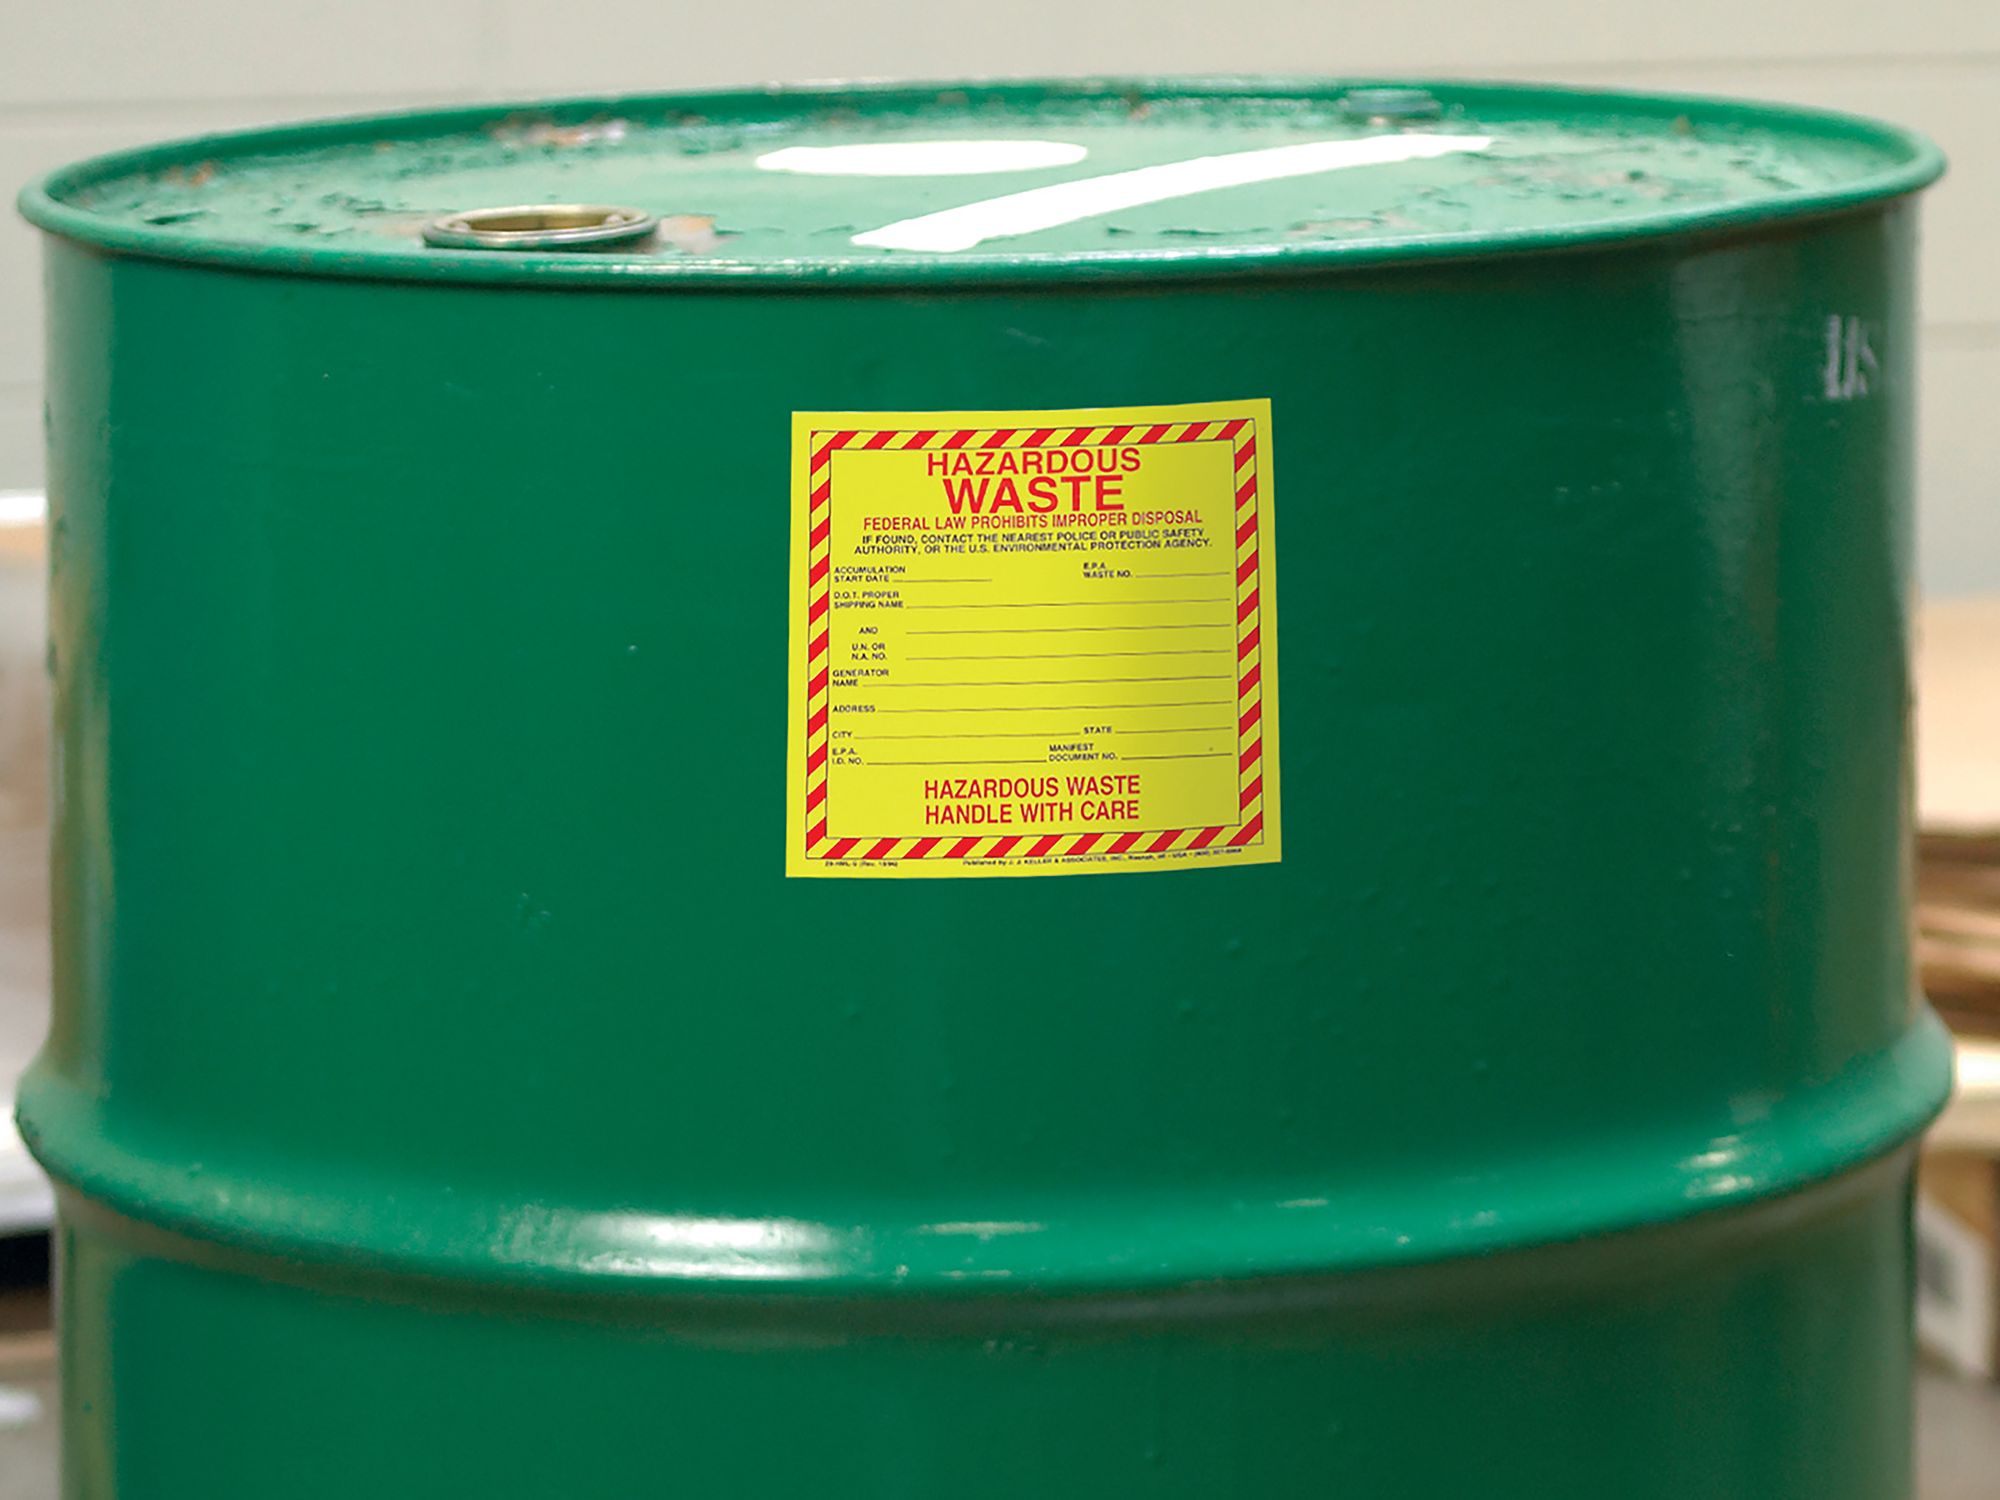 Hazardous waste numbers and hazard codes